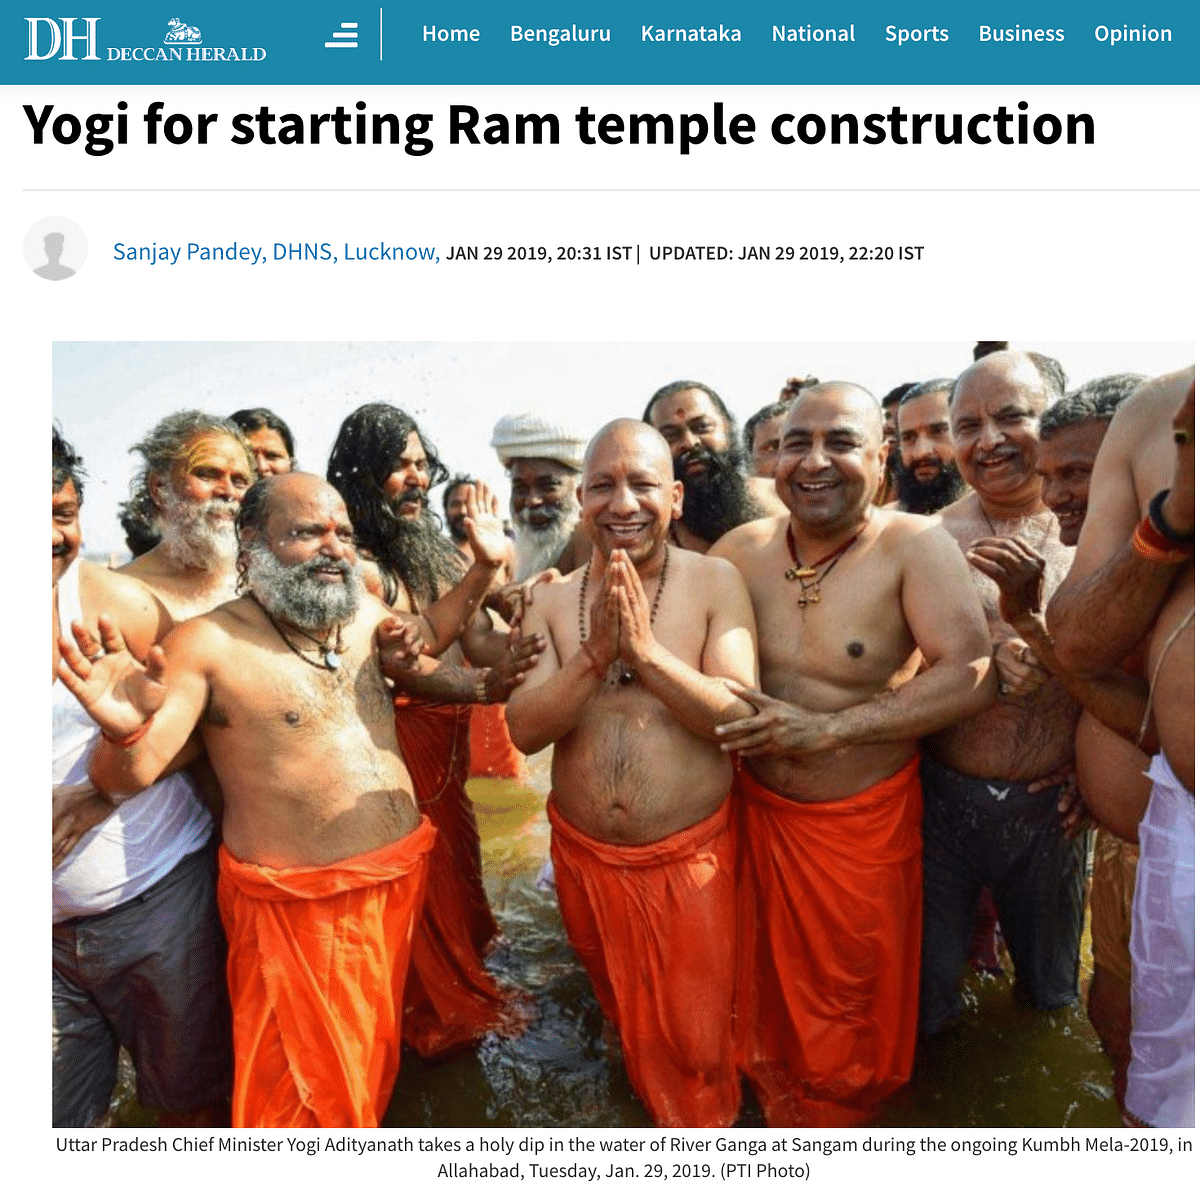 The image is from 2019 when Yogi Adityanath had visited the Kumbh Mela in Prayagraj.